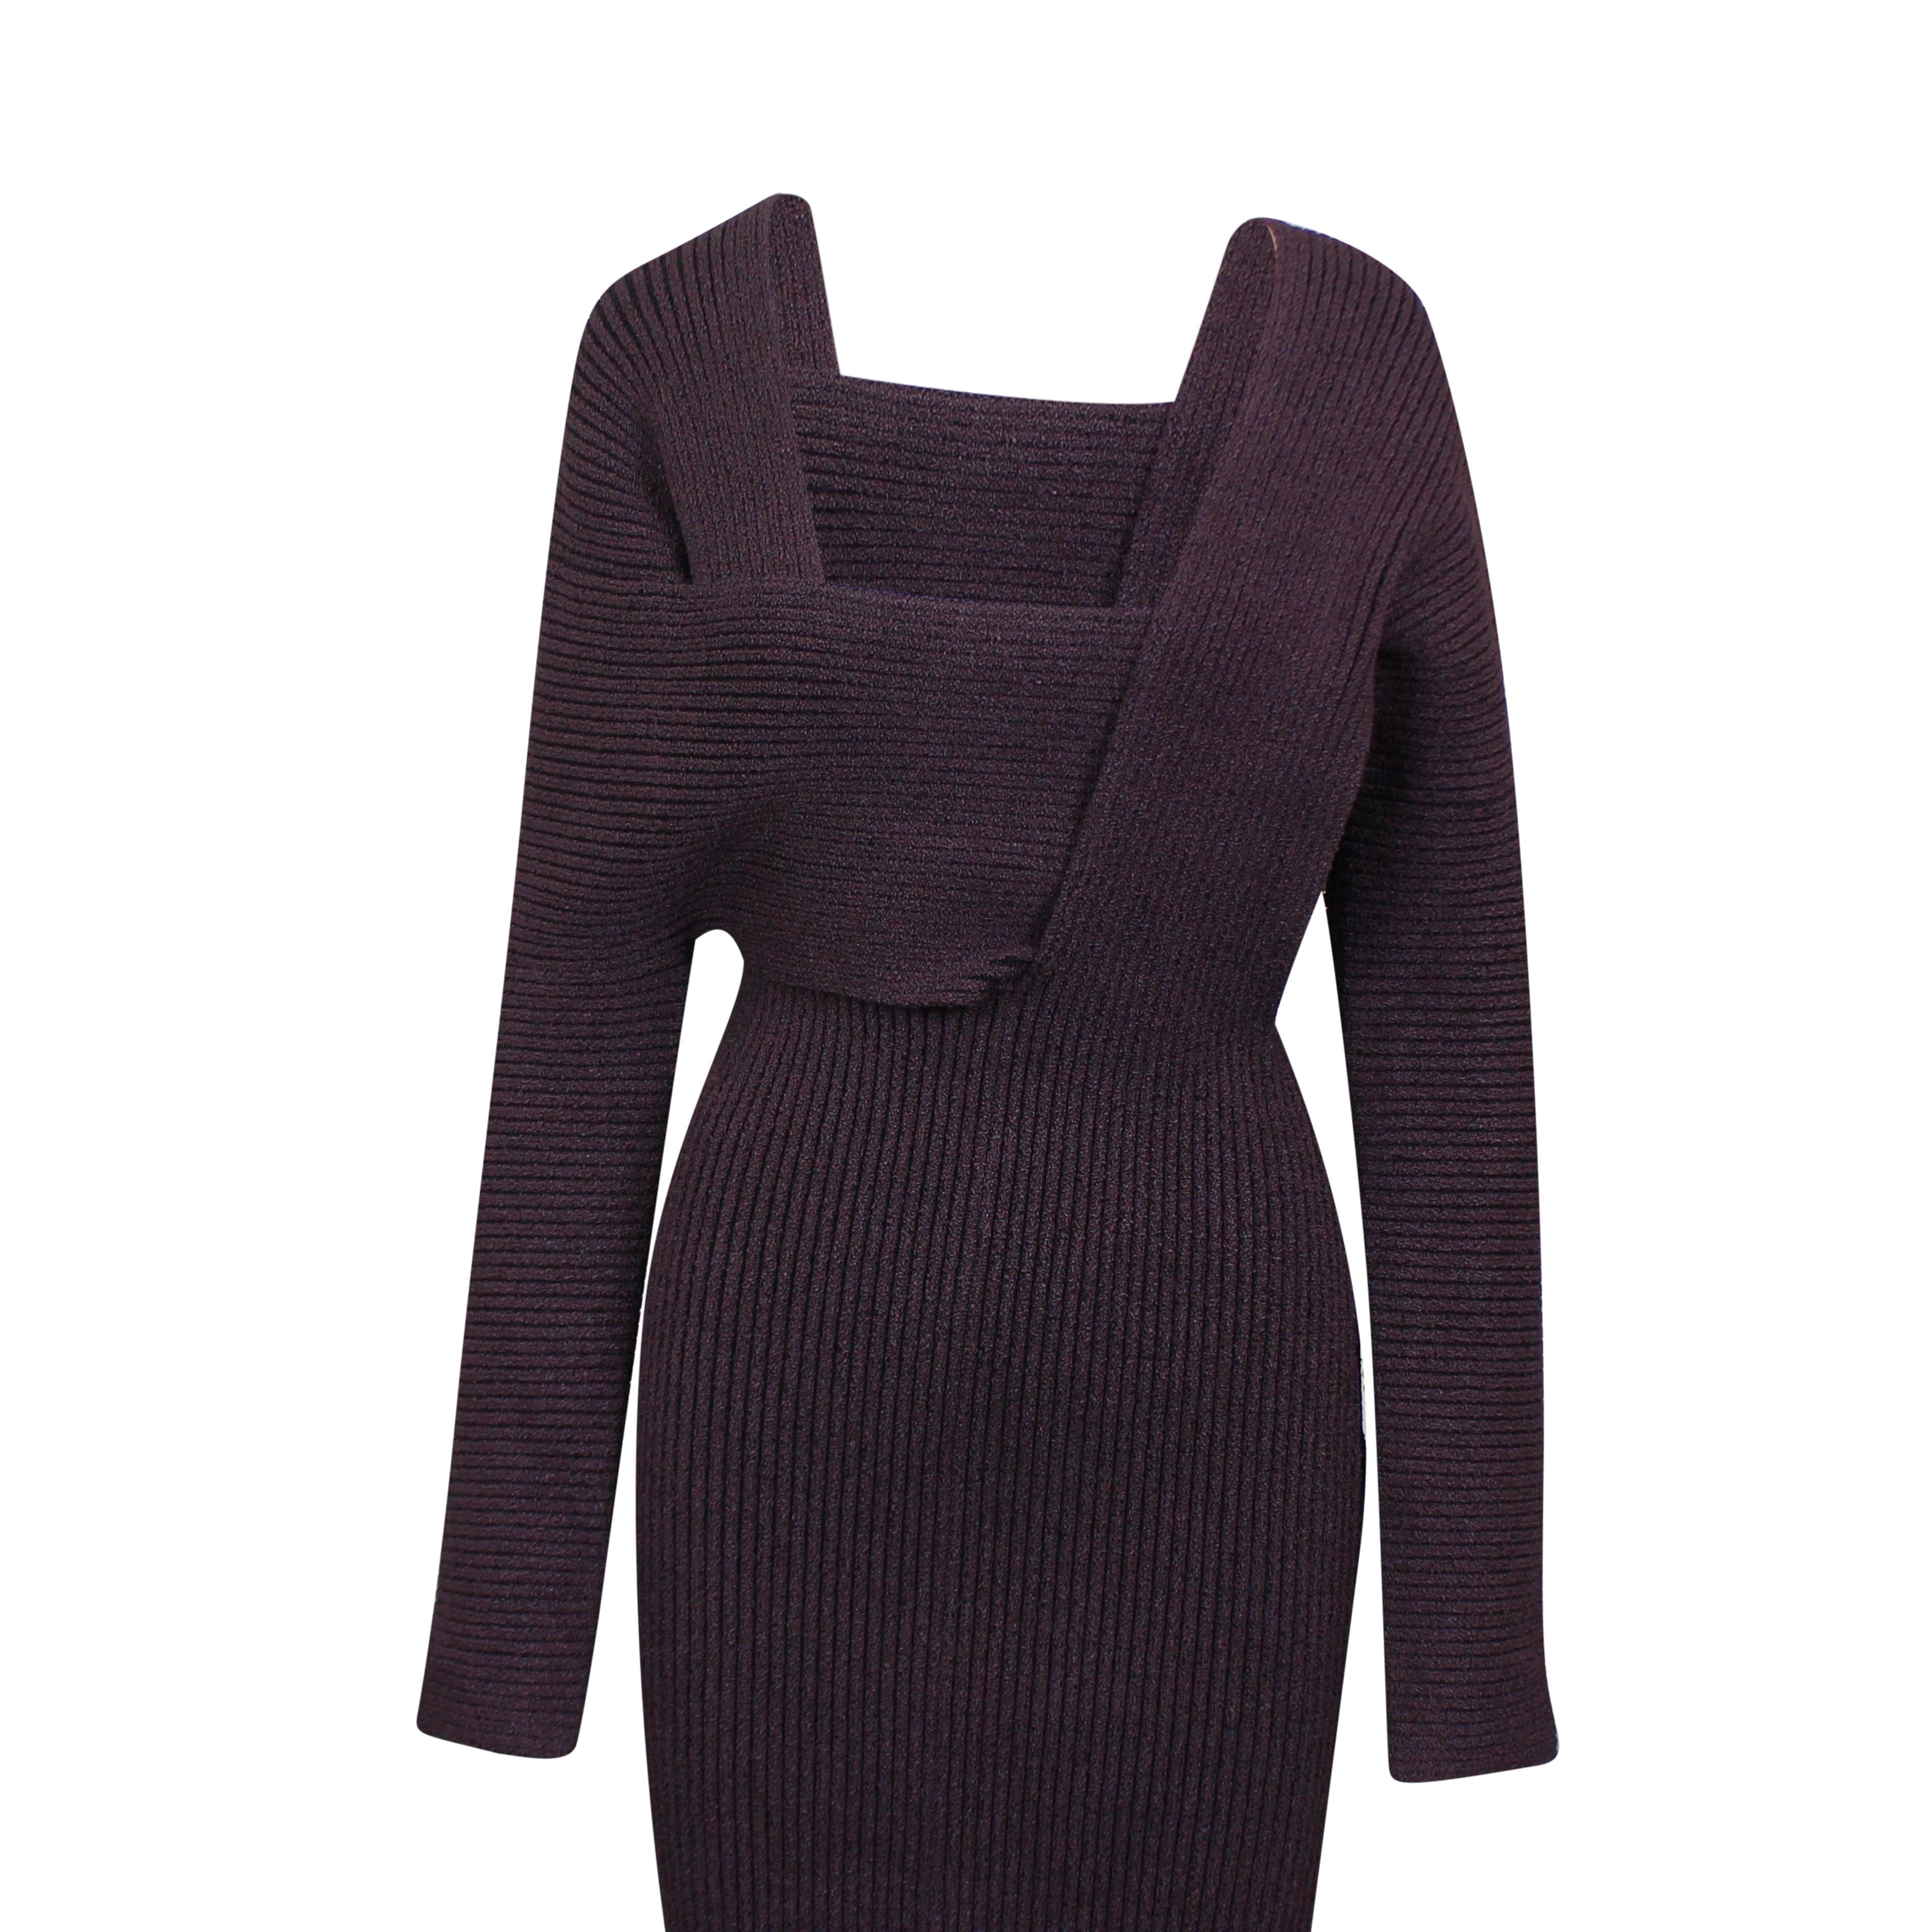 Alternate View 1 of Purple Sable Rib Knit Short Dress